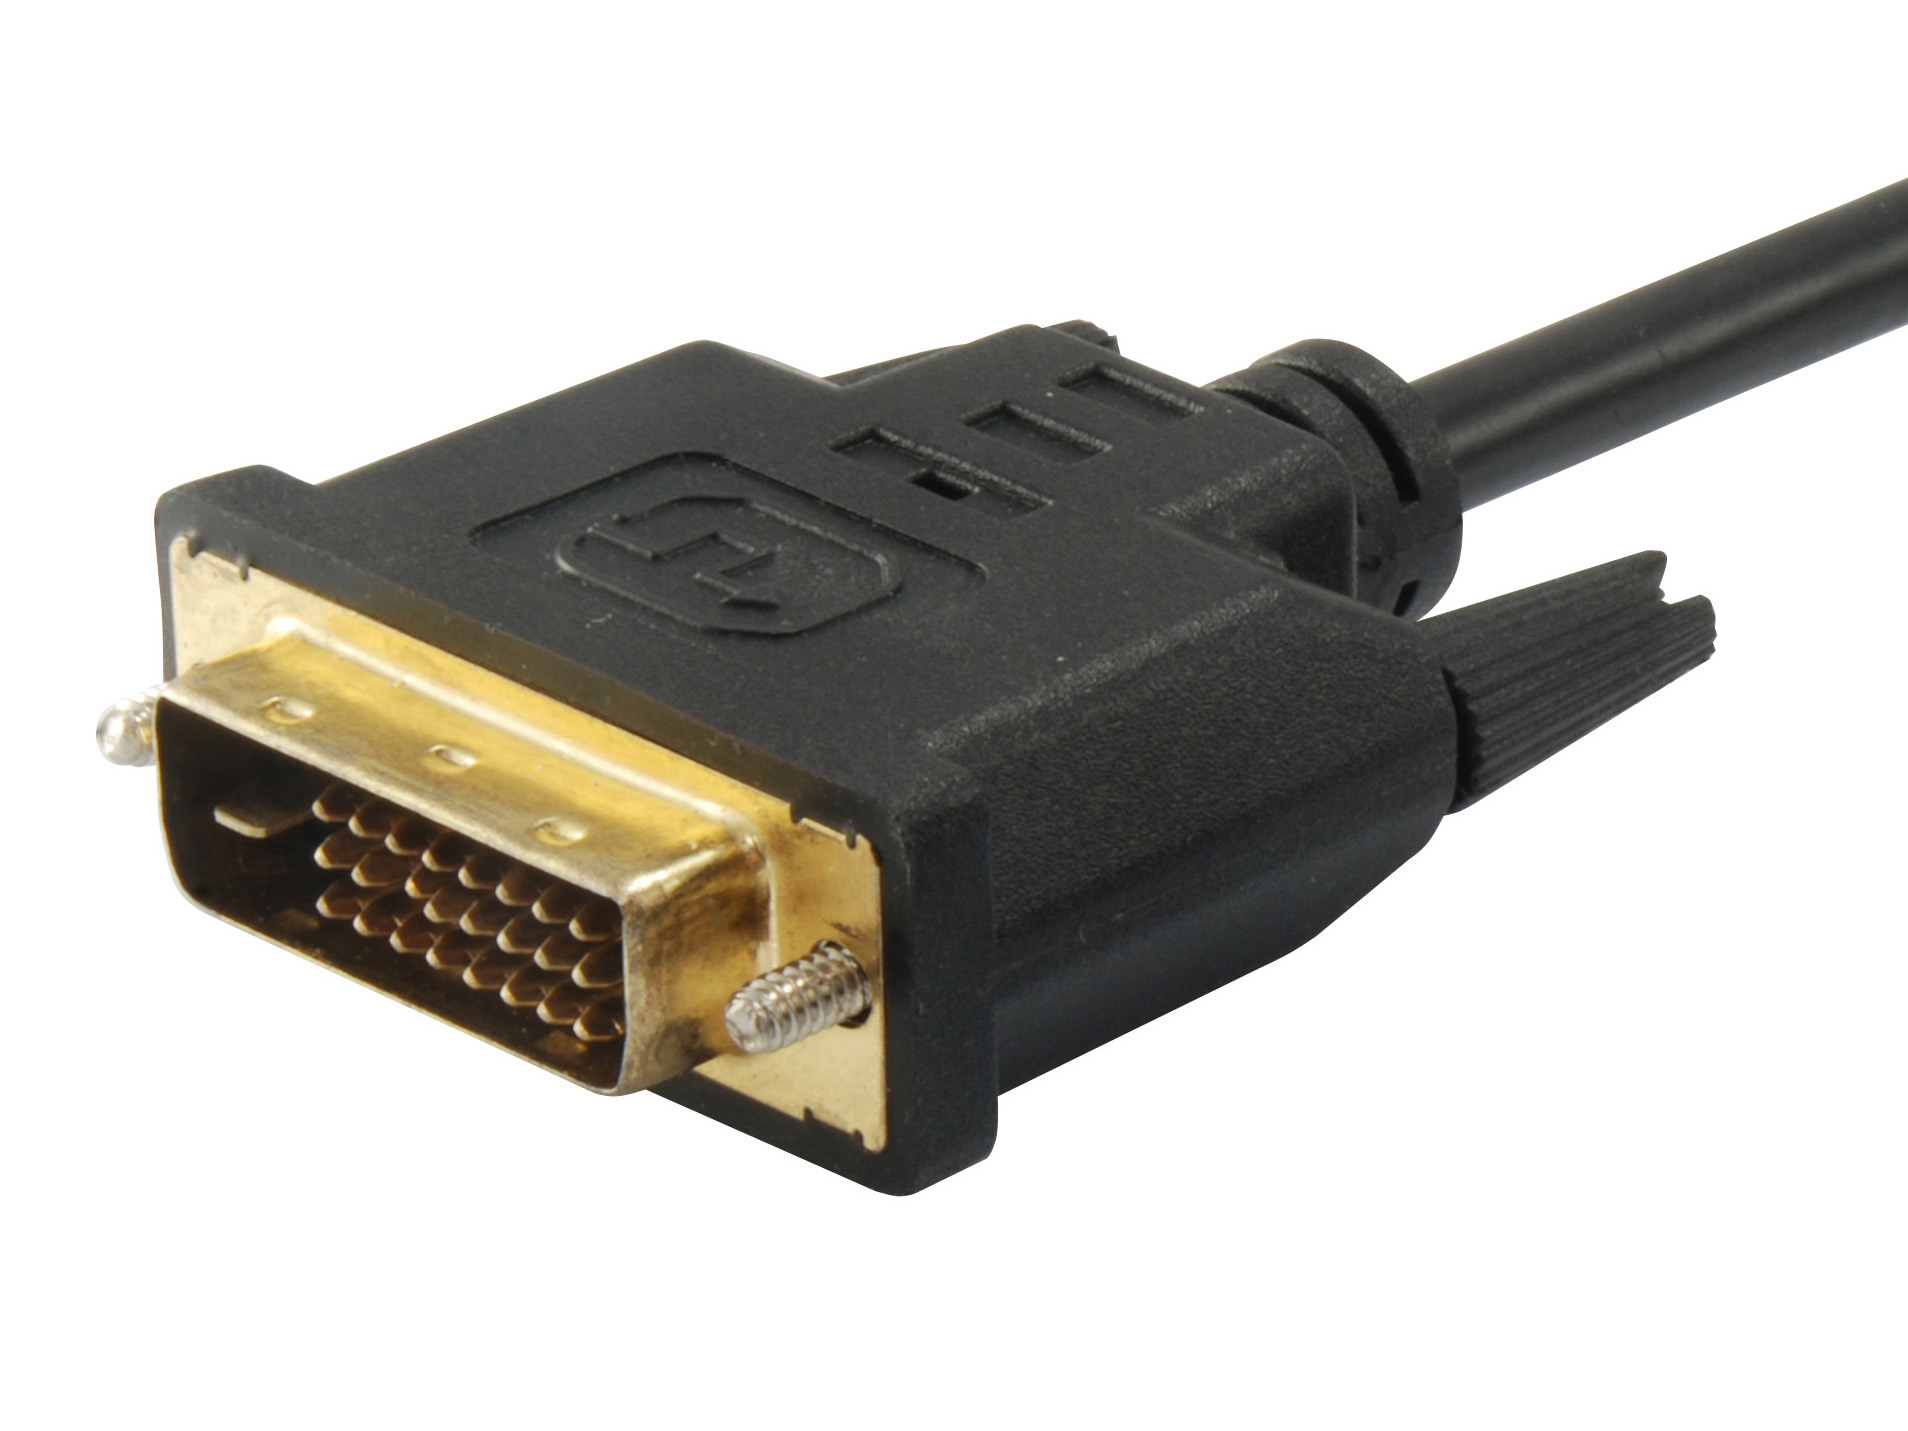 Digital Data Communications DVI-Kabel - HDMI (M) bis DVI-D (M)